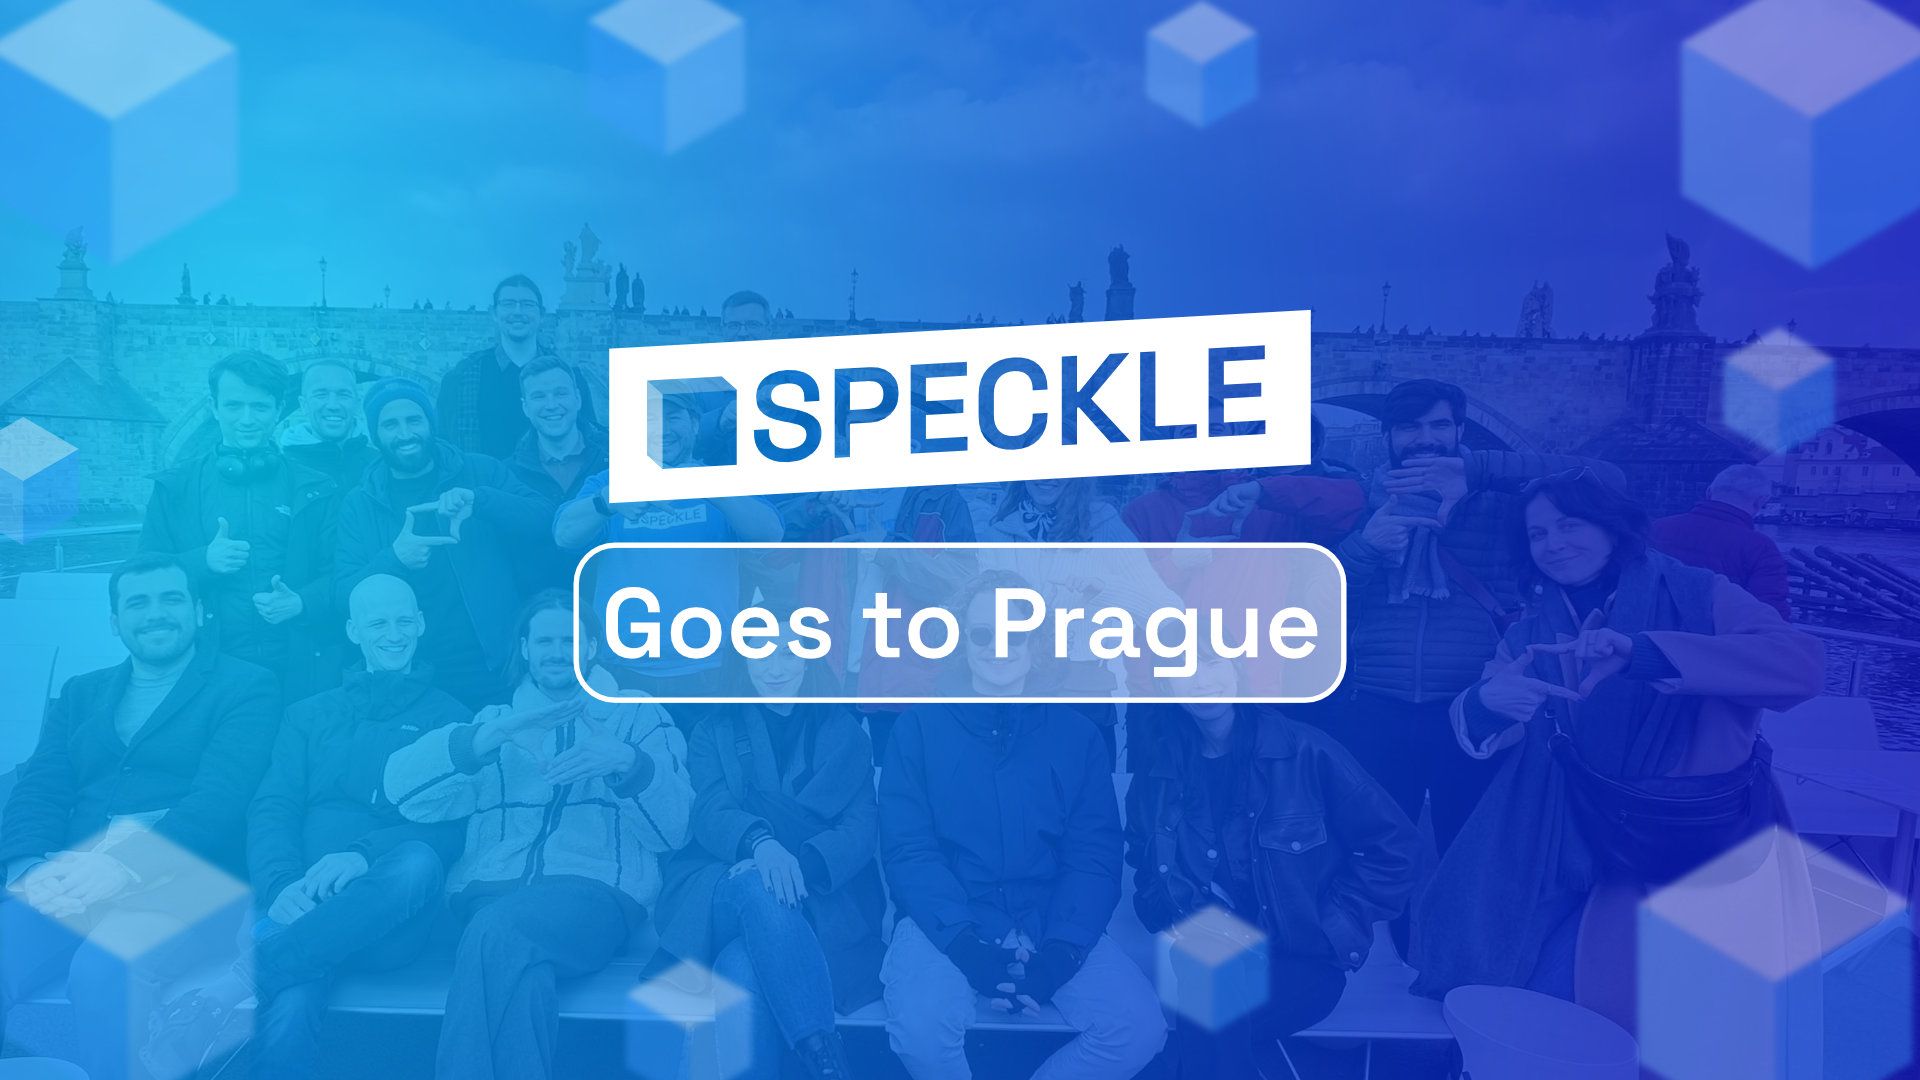 Speckle's Prague Retreat: Bonding and Growing